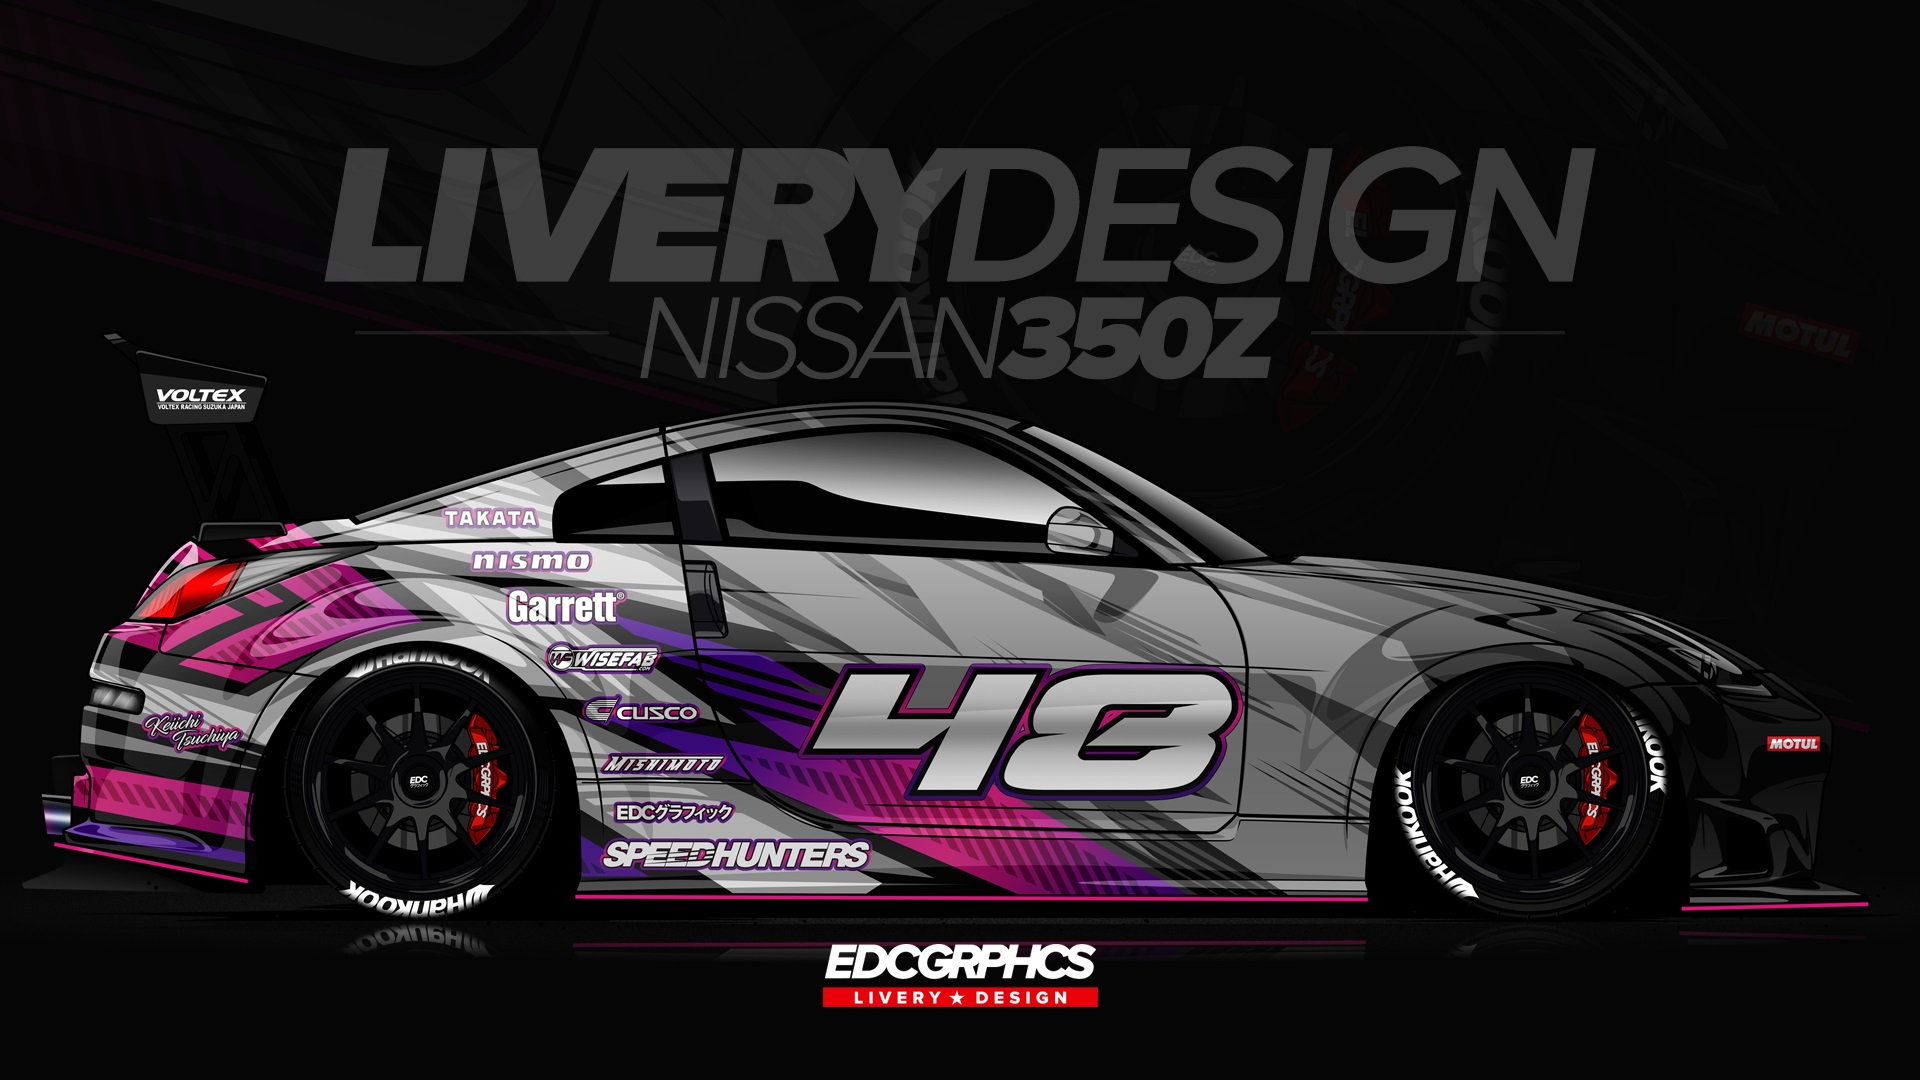 EDC Graphics Render Nissan 350Z Nissan JDM Japanese Cars Race Cars Side View Digital Art Car Vehicle 1920x1080